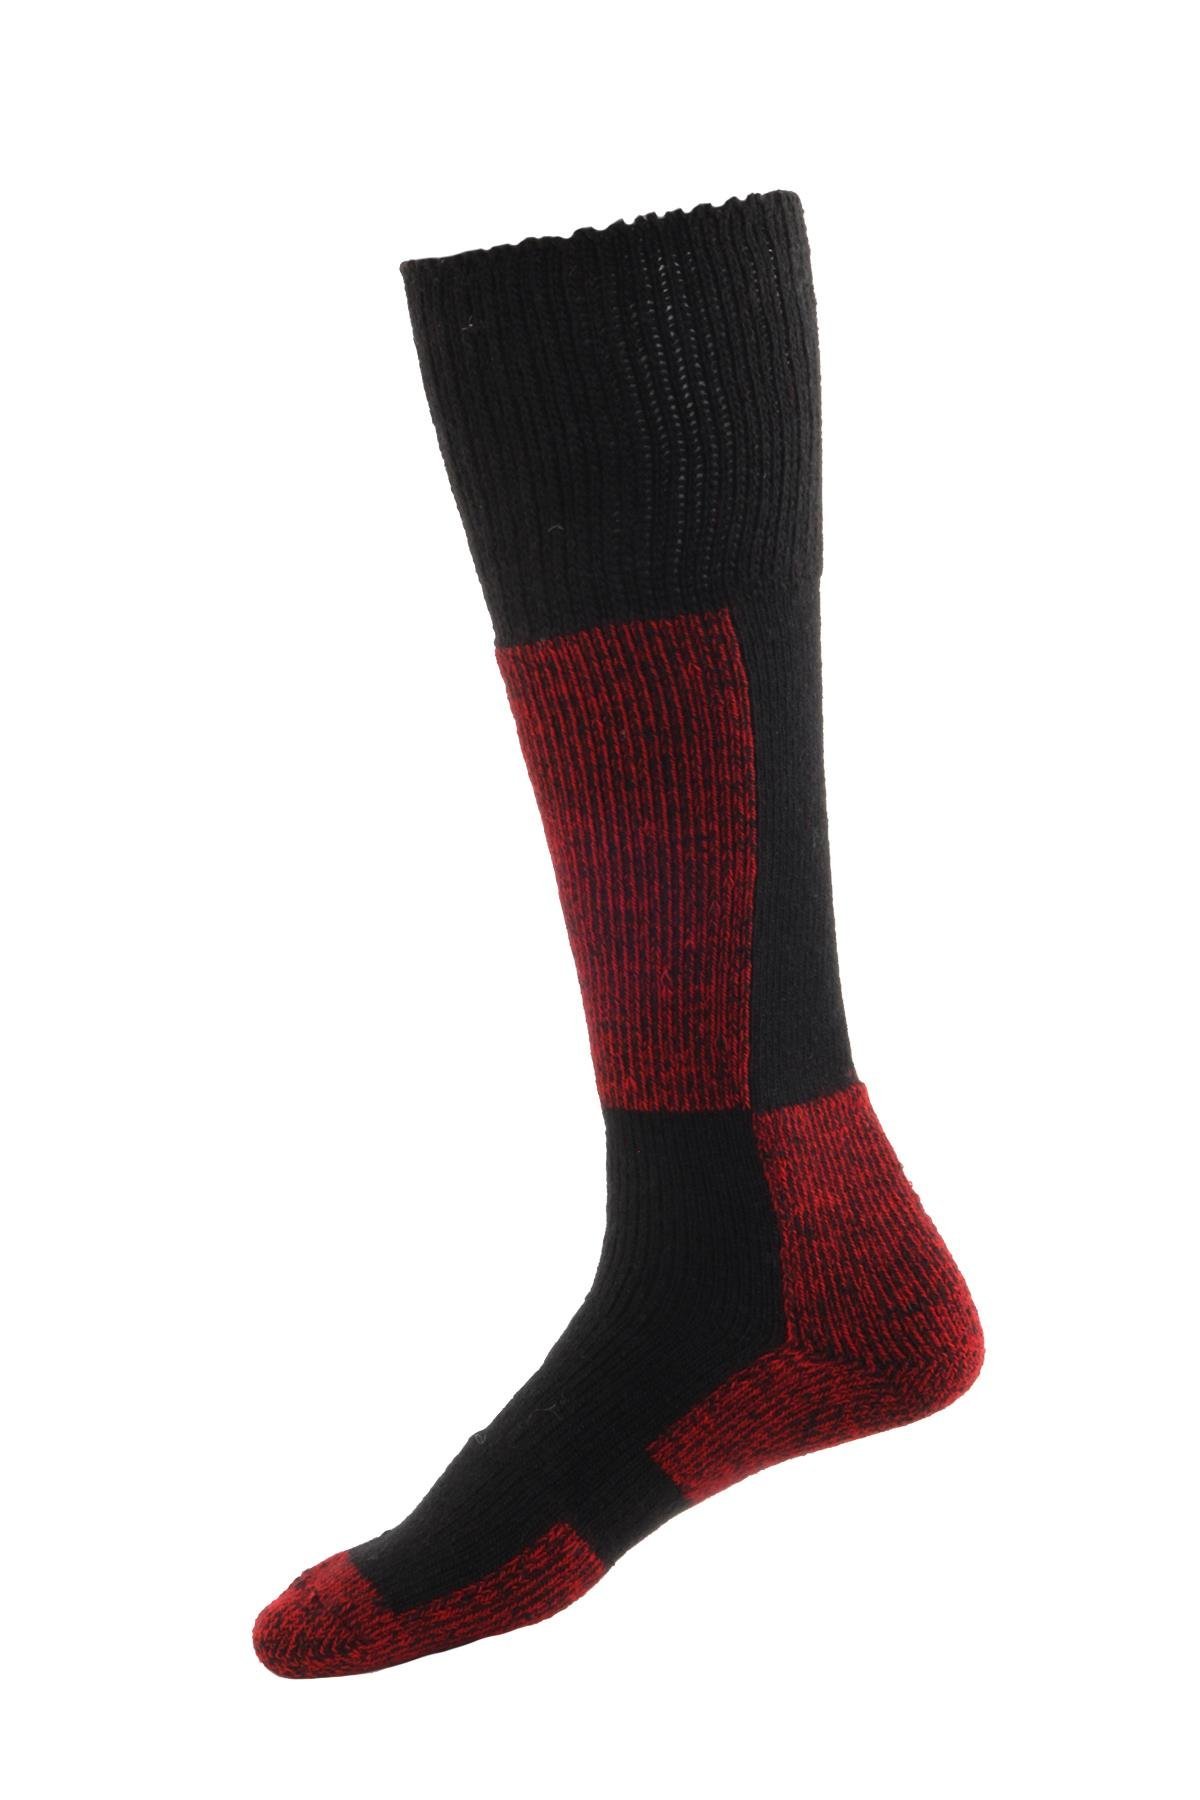 Panthzer Ski Socks Siyah/Kırmızı